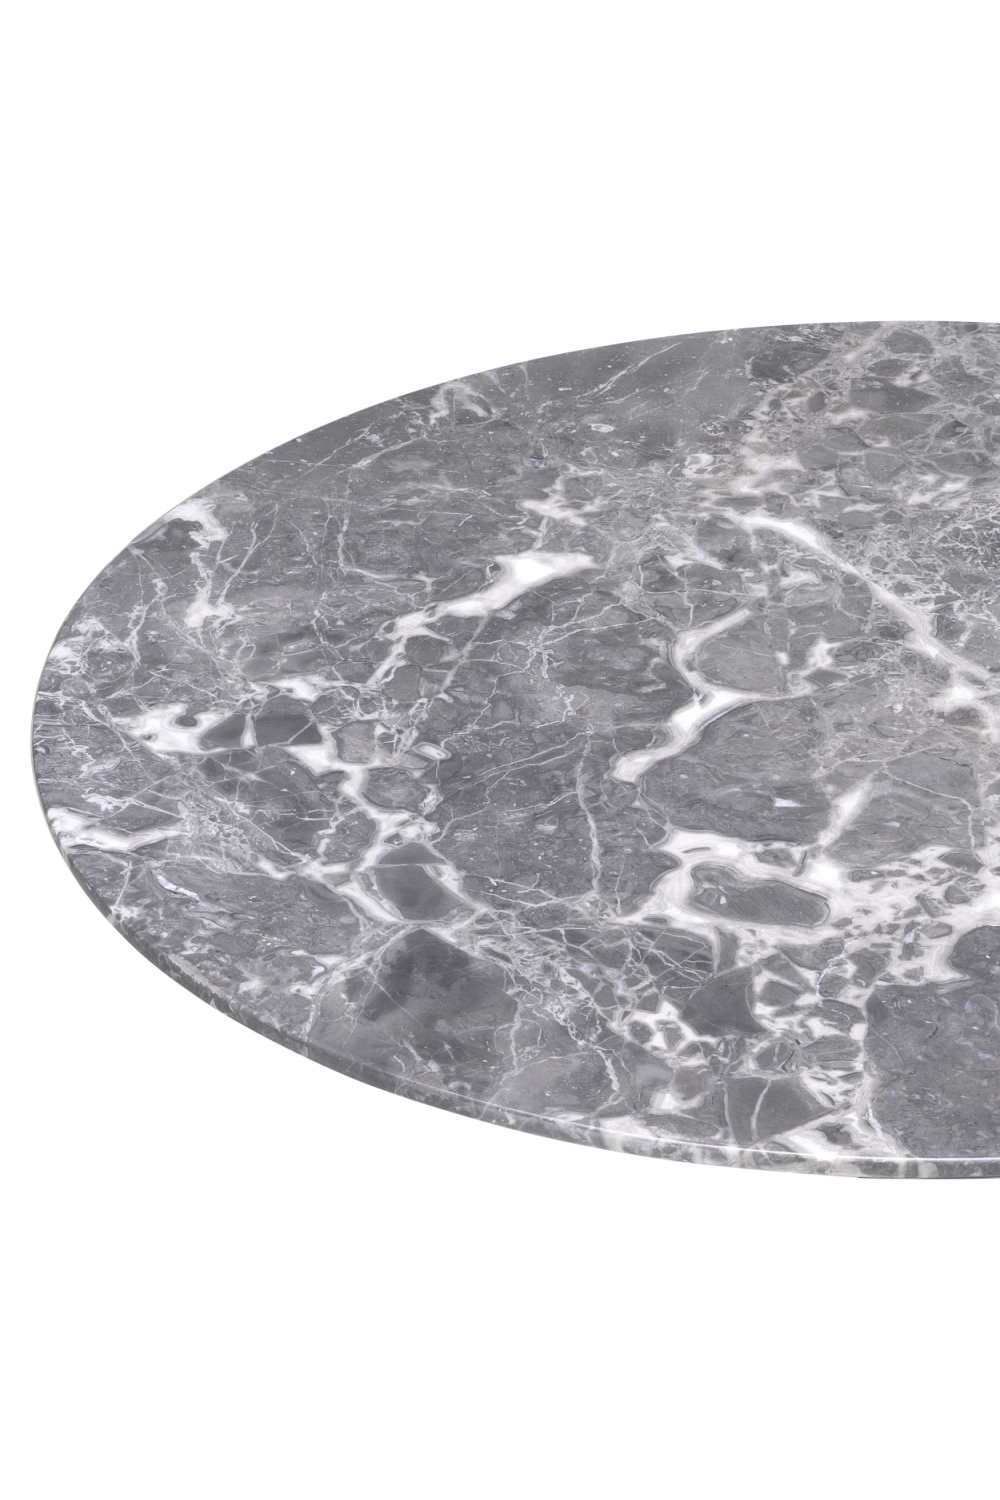 Gray Marble Pedestal Dining Table | Eichholtz Flow | Oroa.com